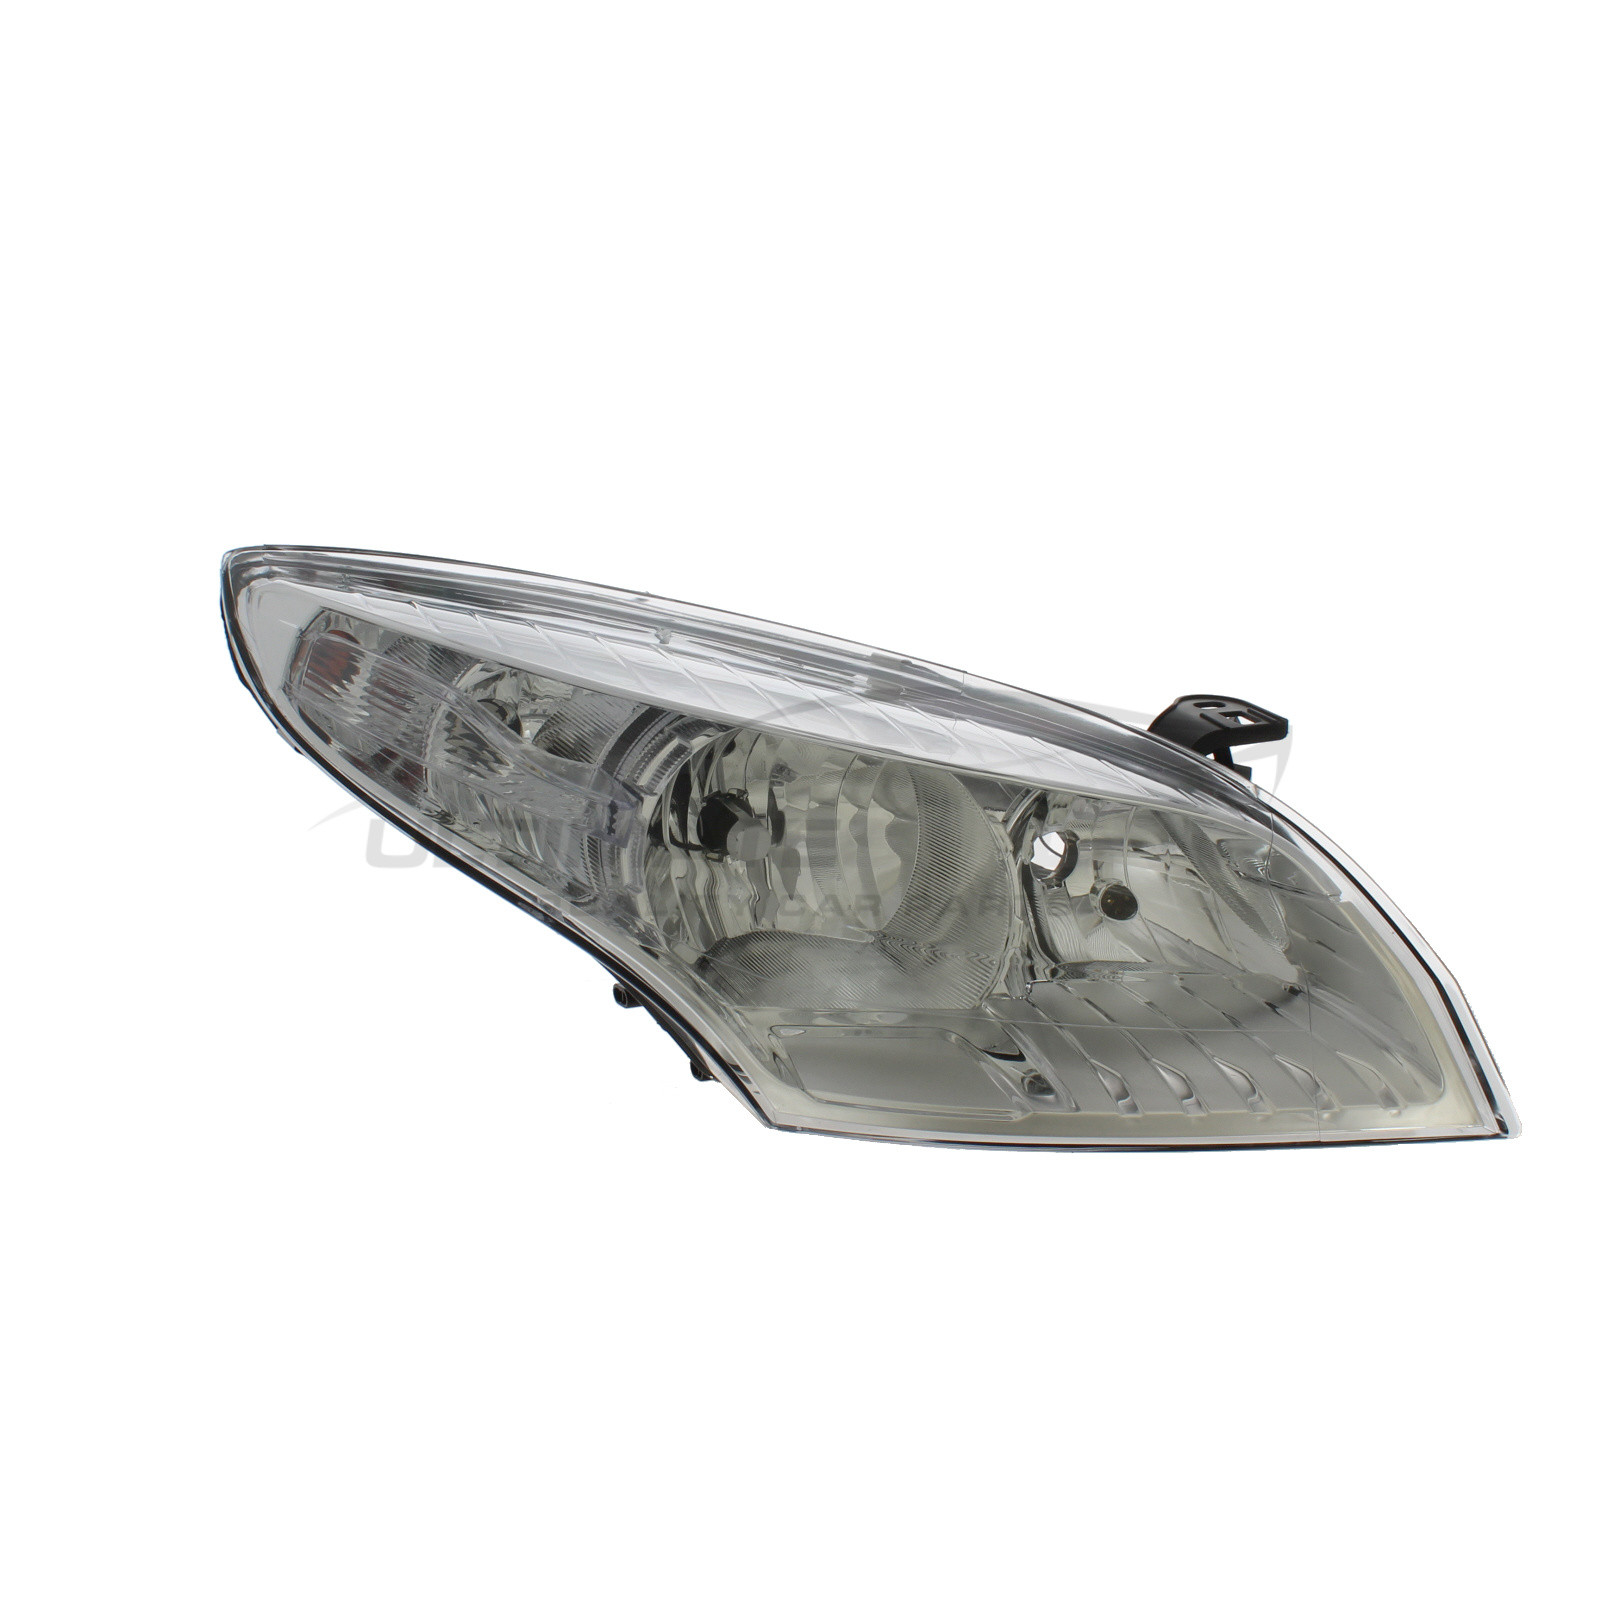 Headlight / Headlamp for Renault Megane